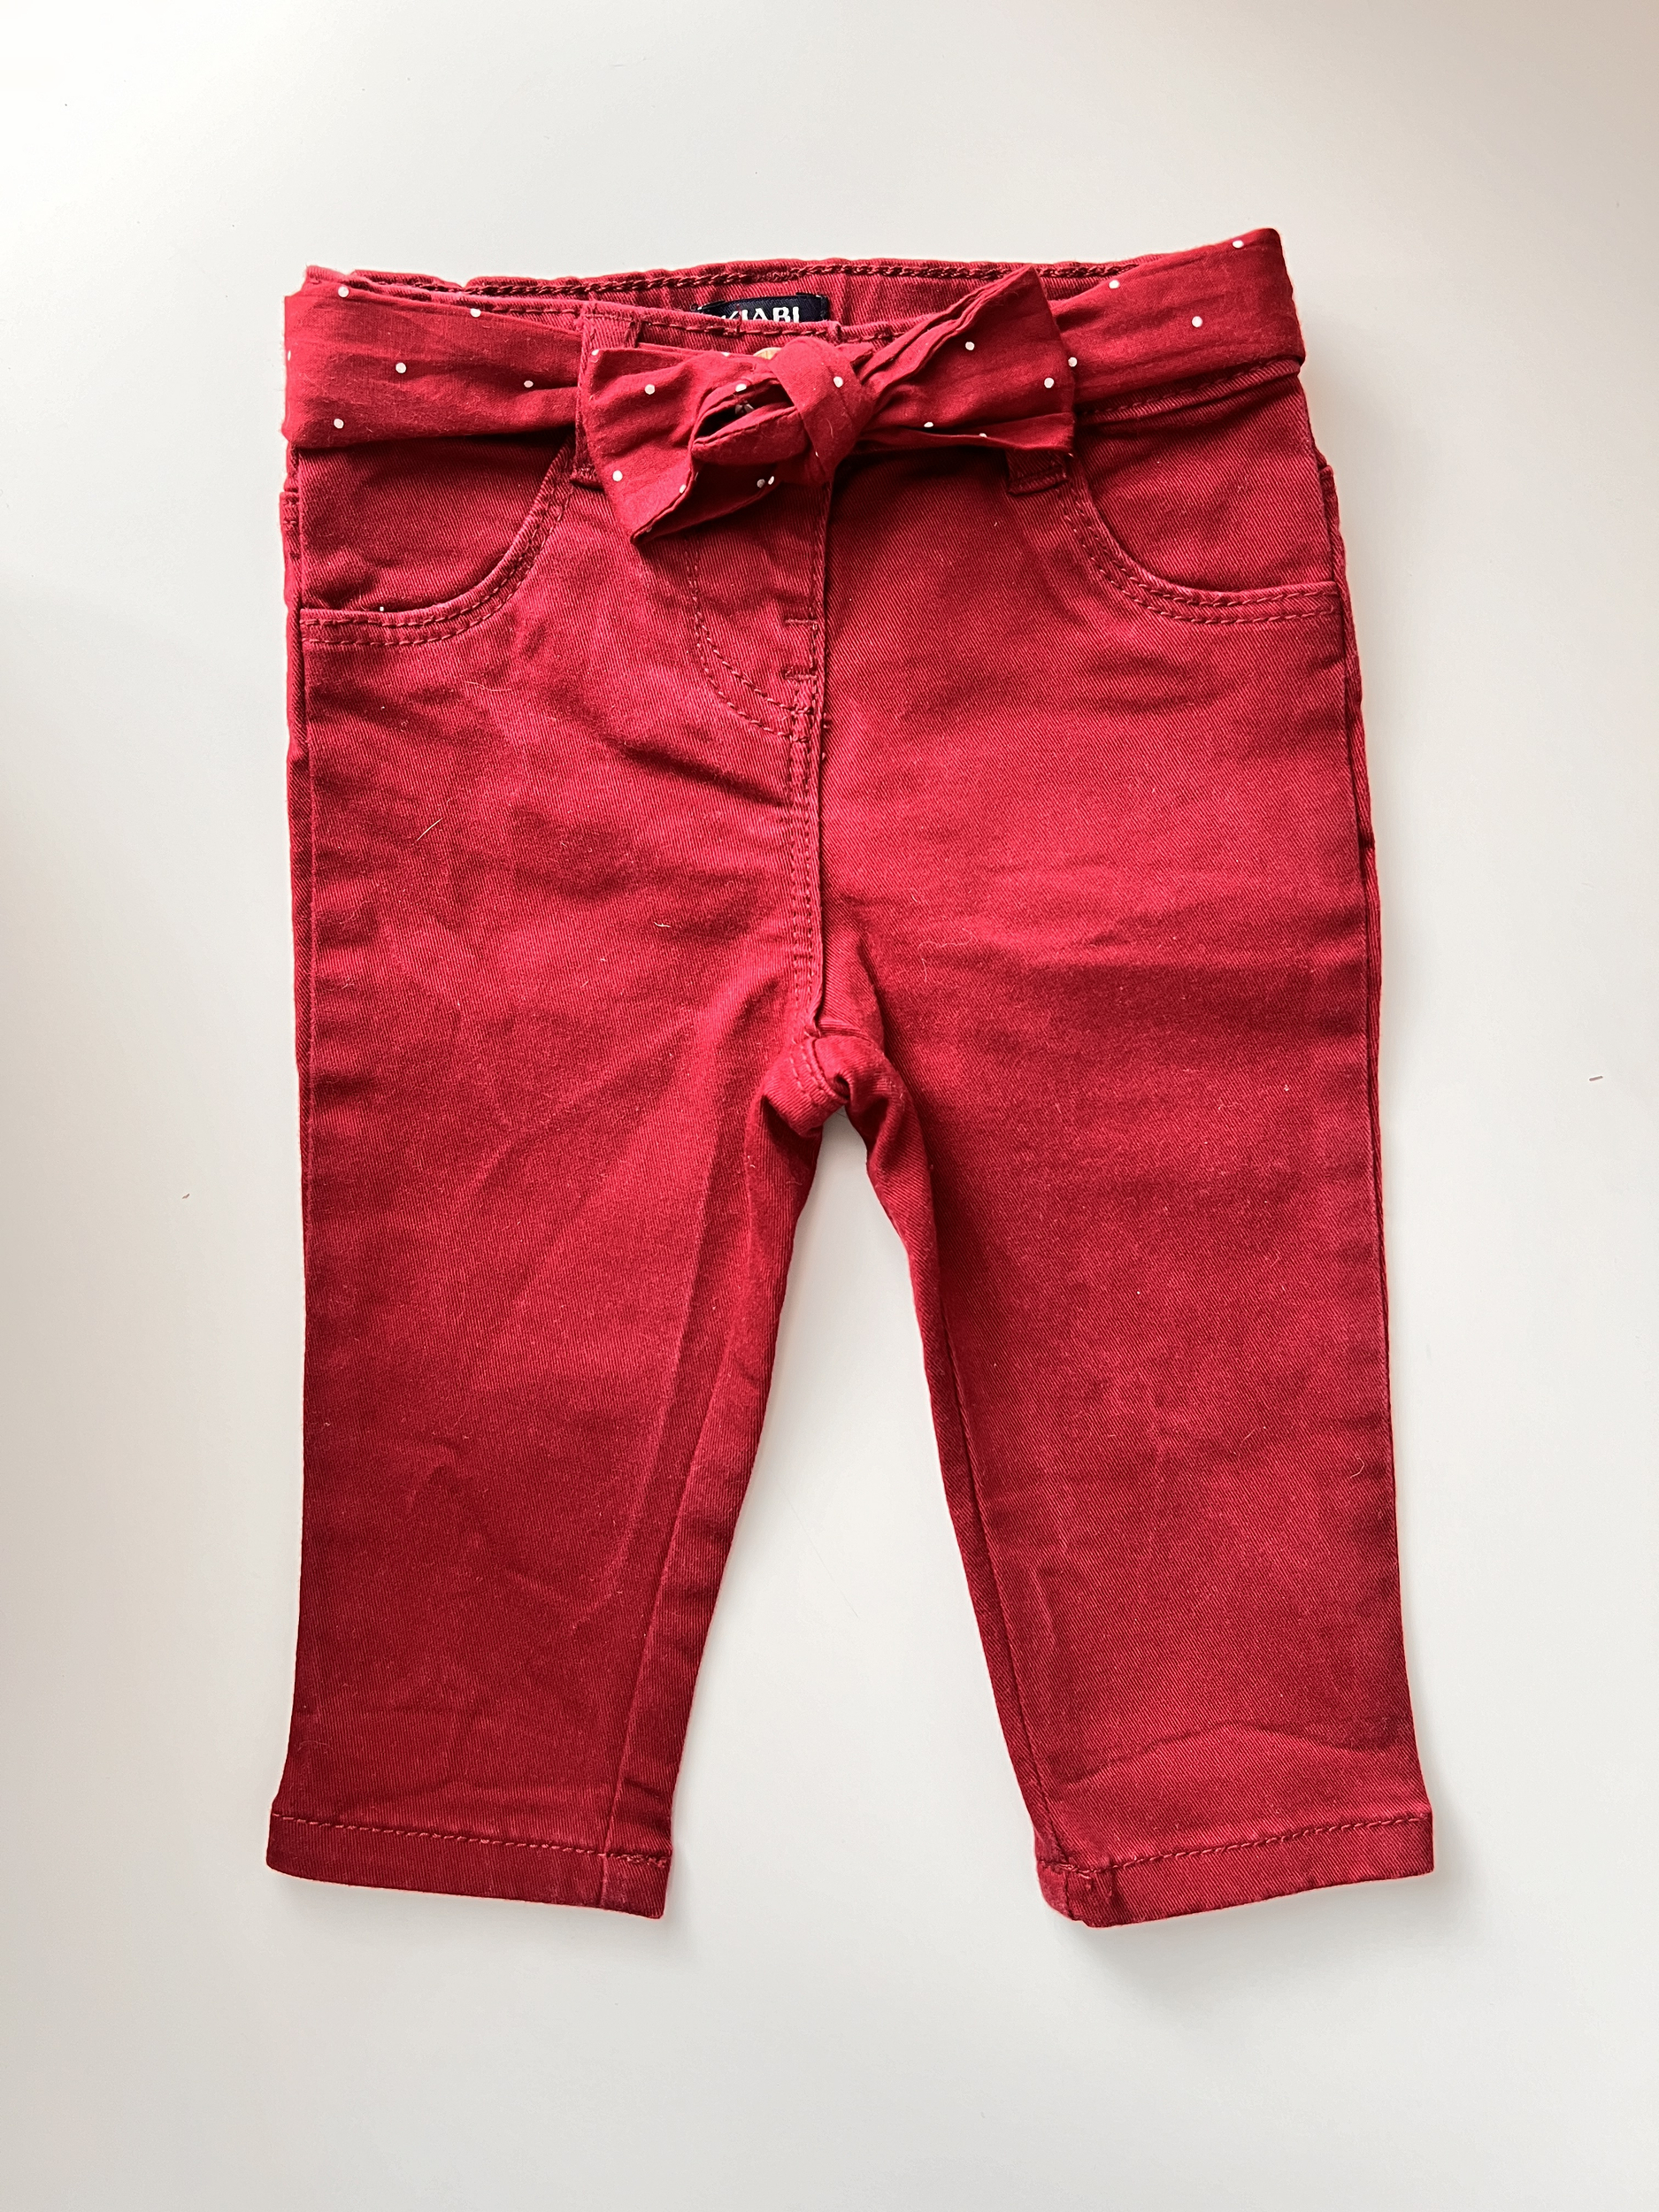 Pantalon jean bordeaux bébé fille - Kiabi - 6 mois